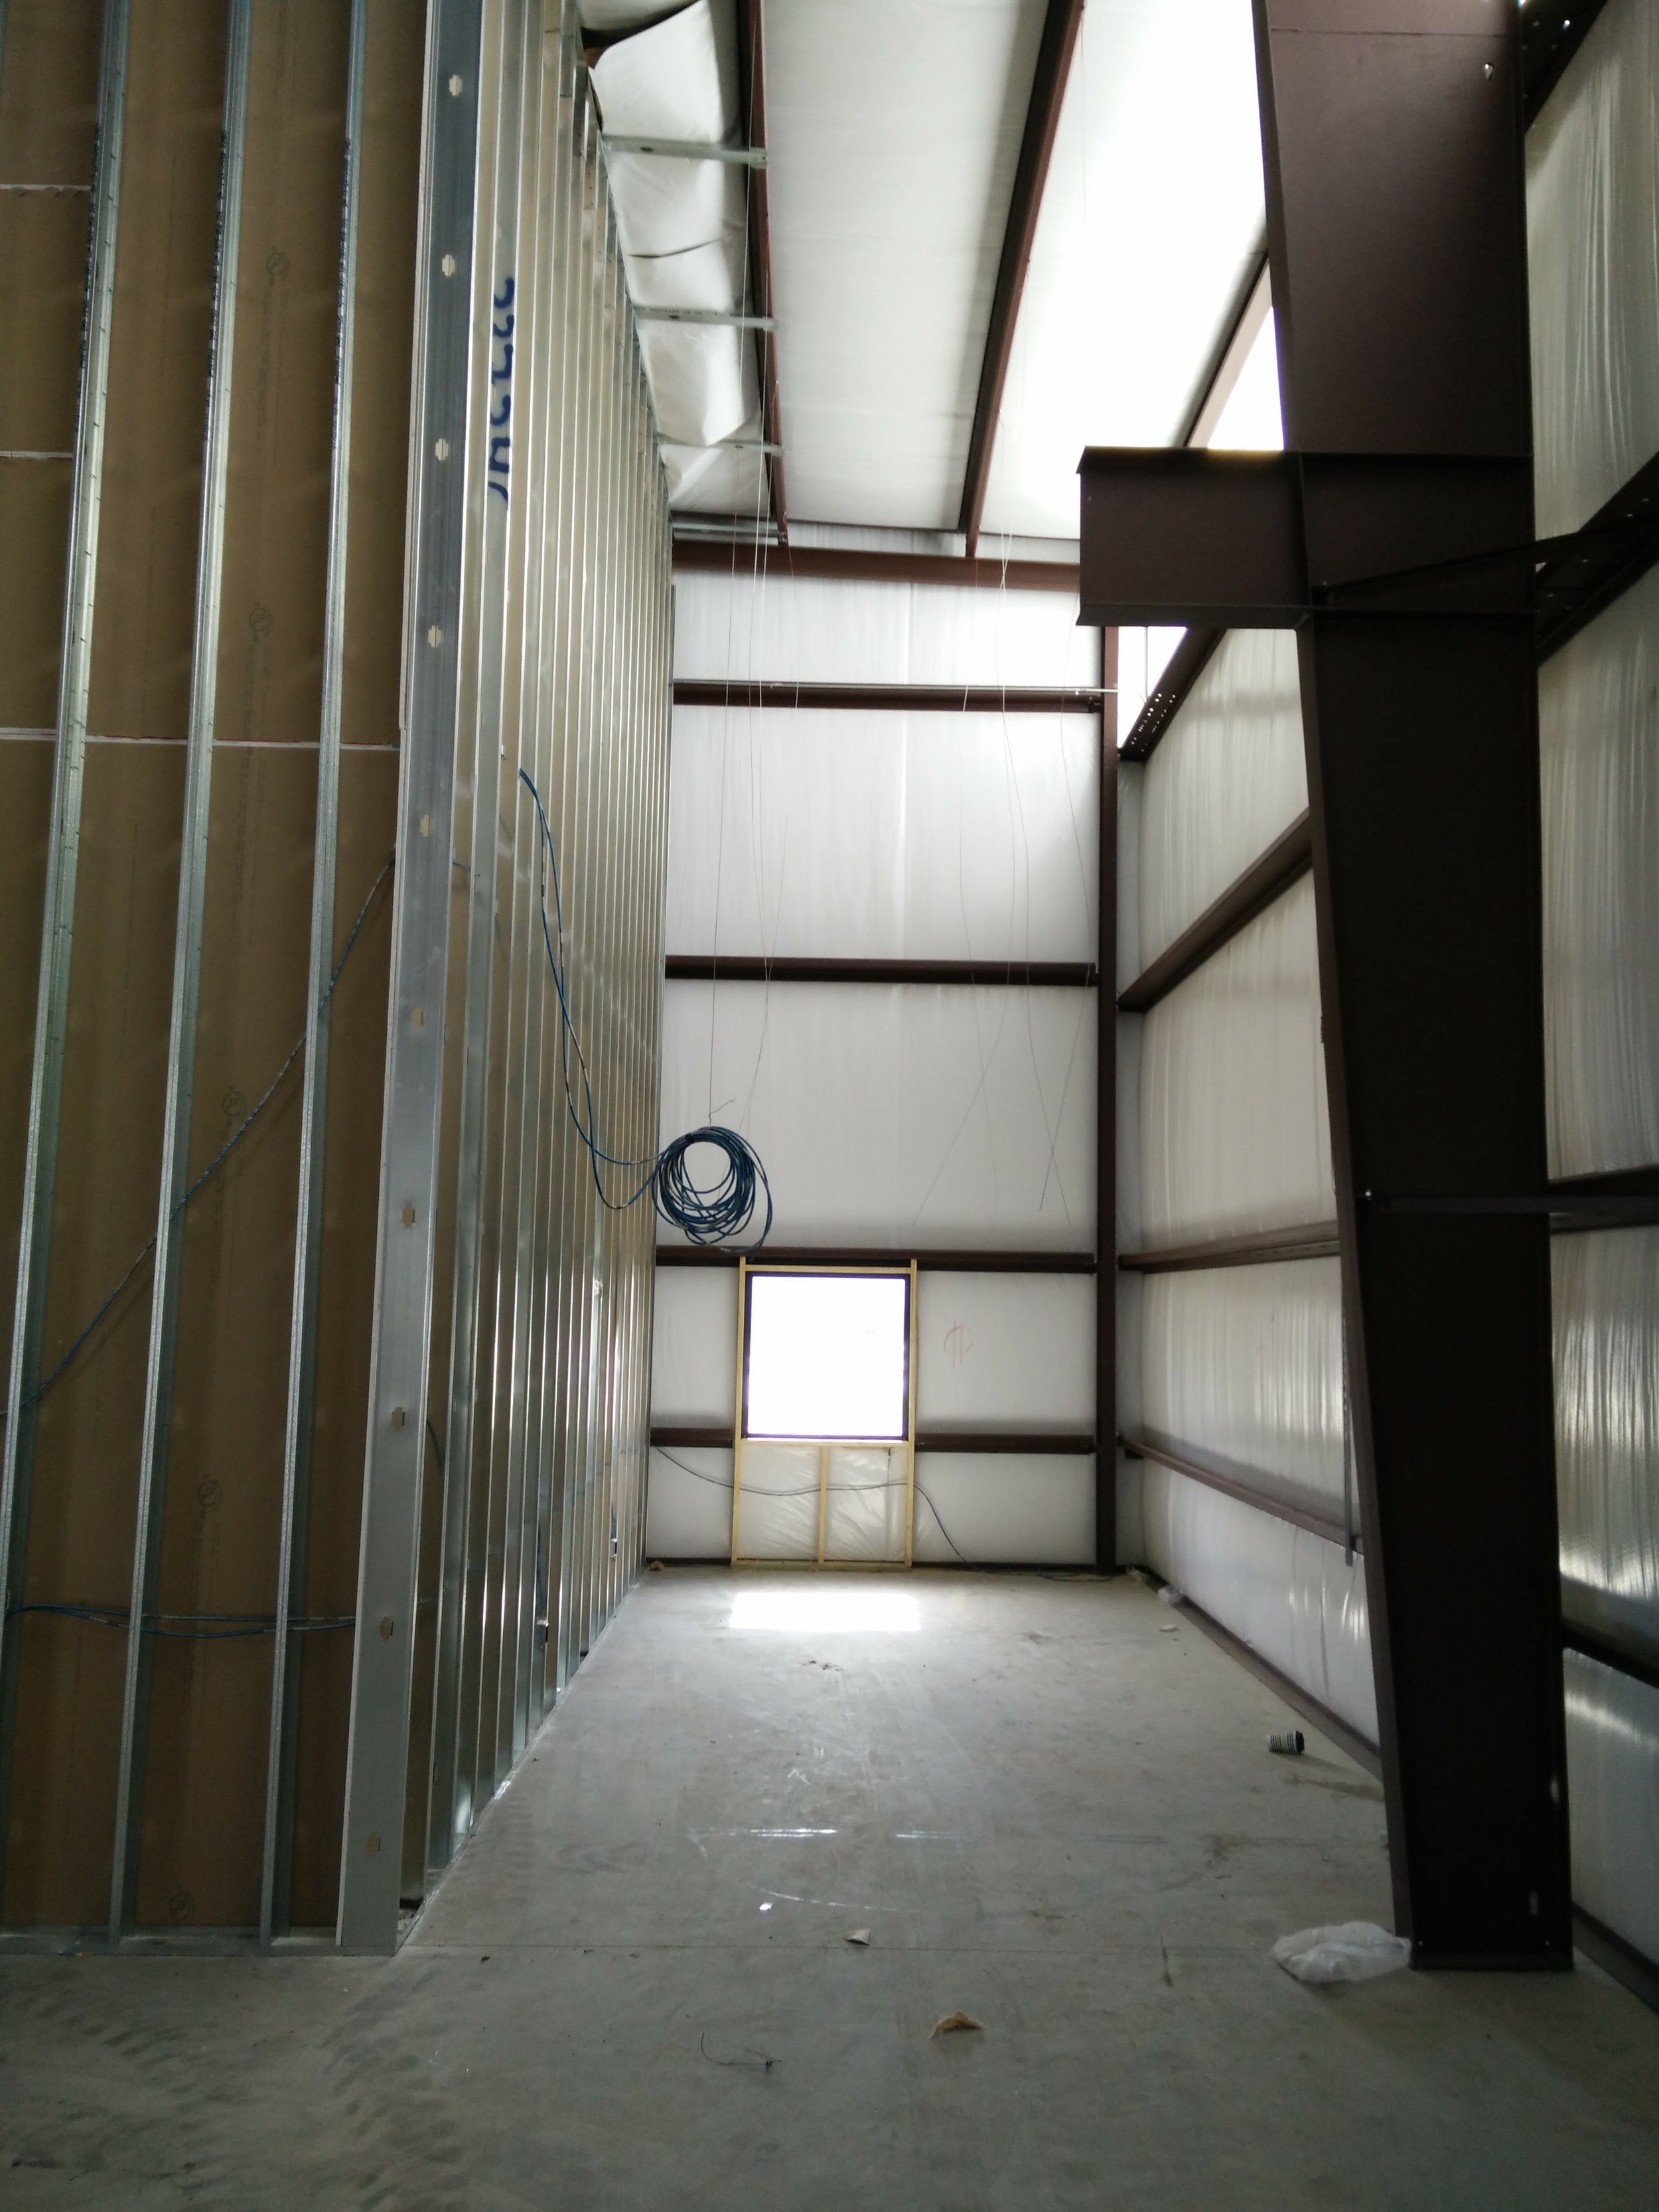 Area for coating storage